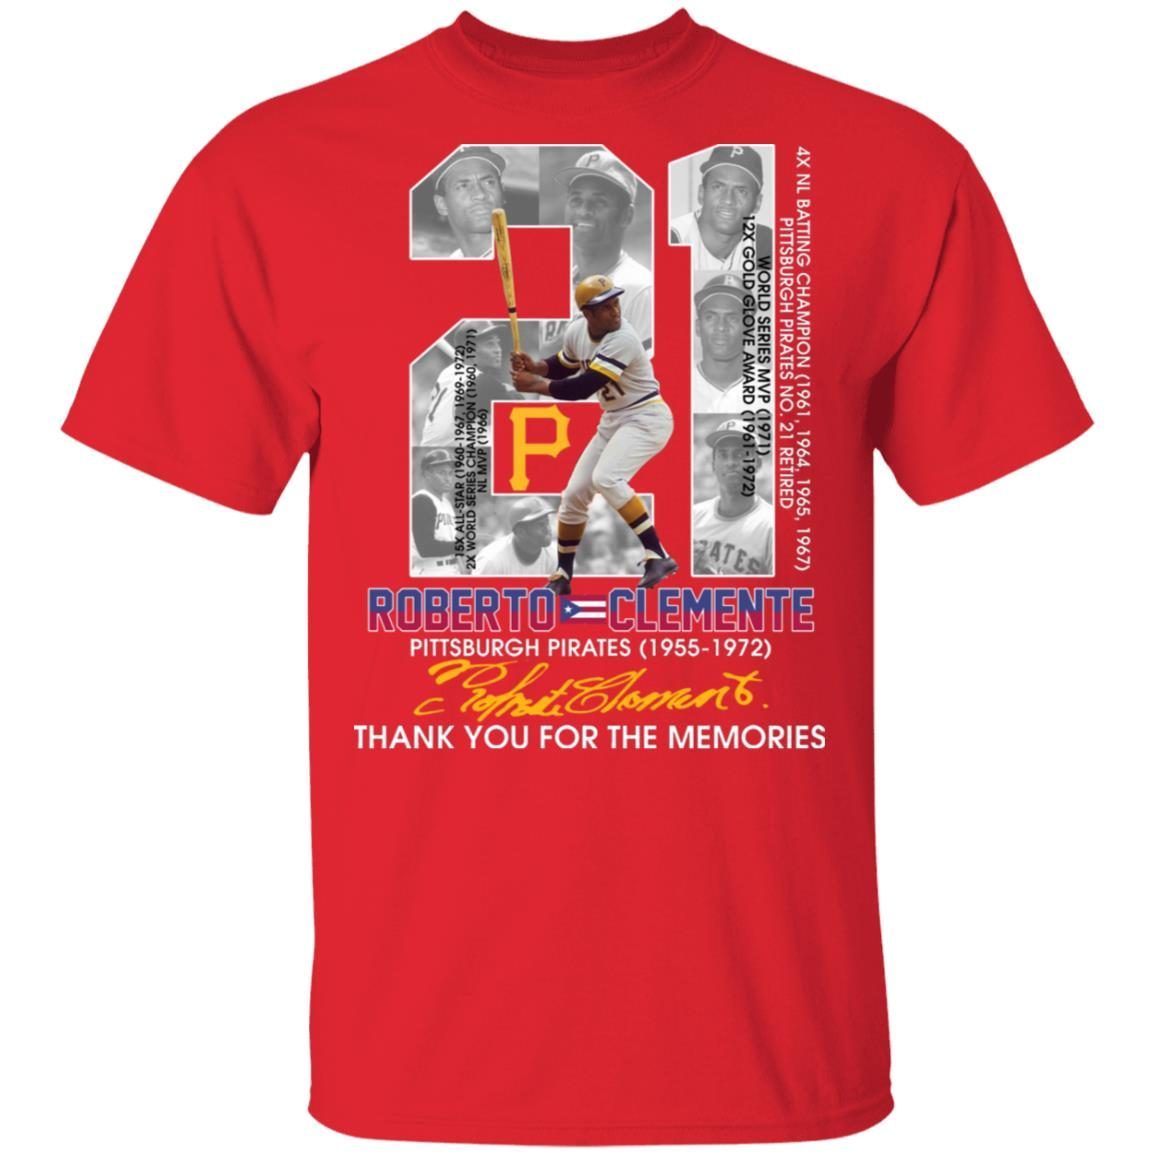 Pittsburgh Pirates Roberto Clemente #21 1955-1972 Shirt 2